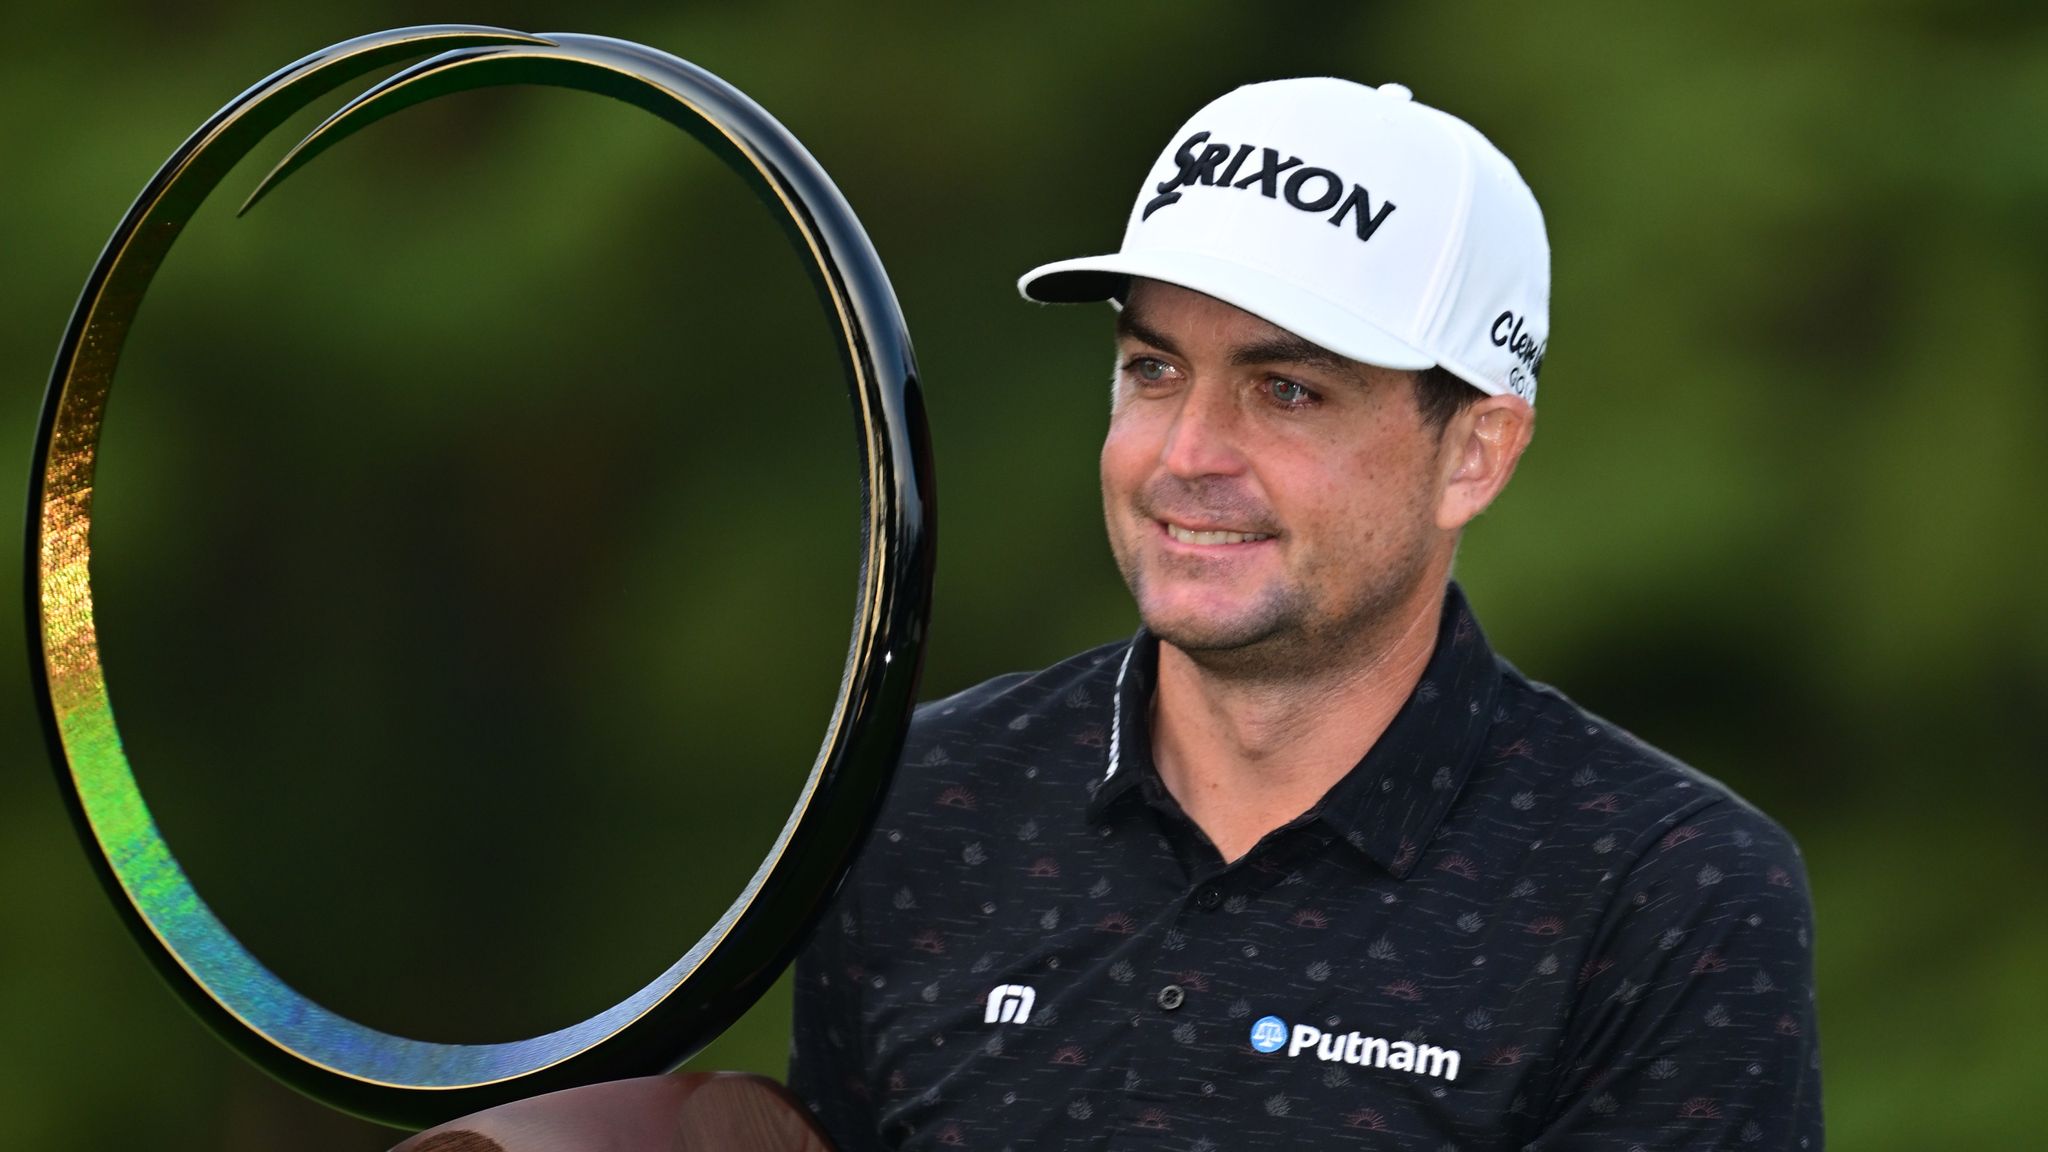 Bradley wins PGA Championship in playoff - CNN.com